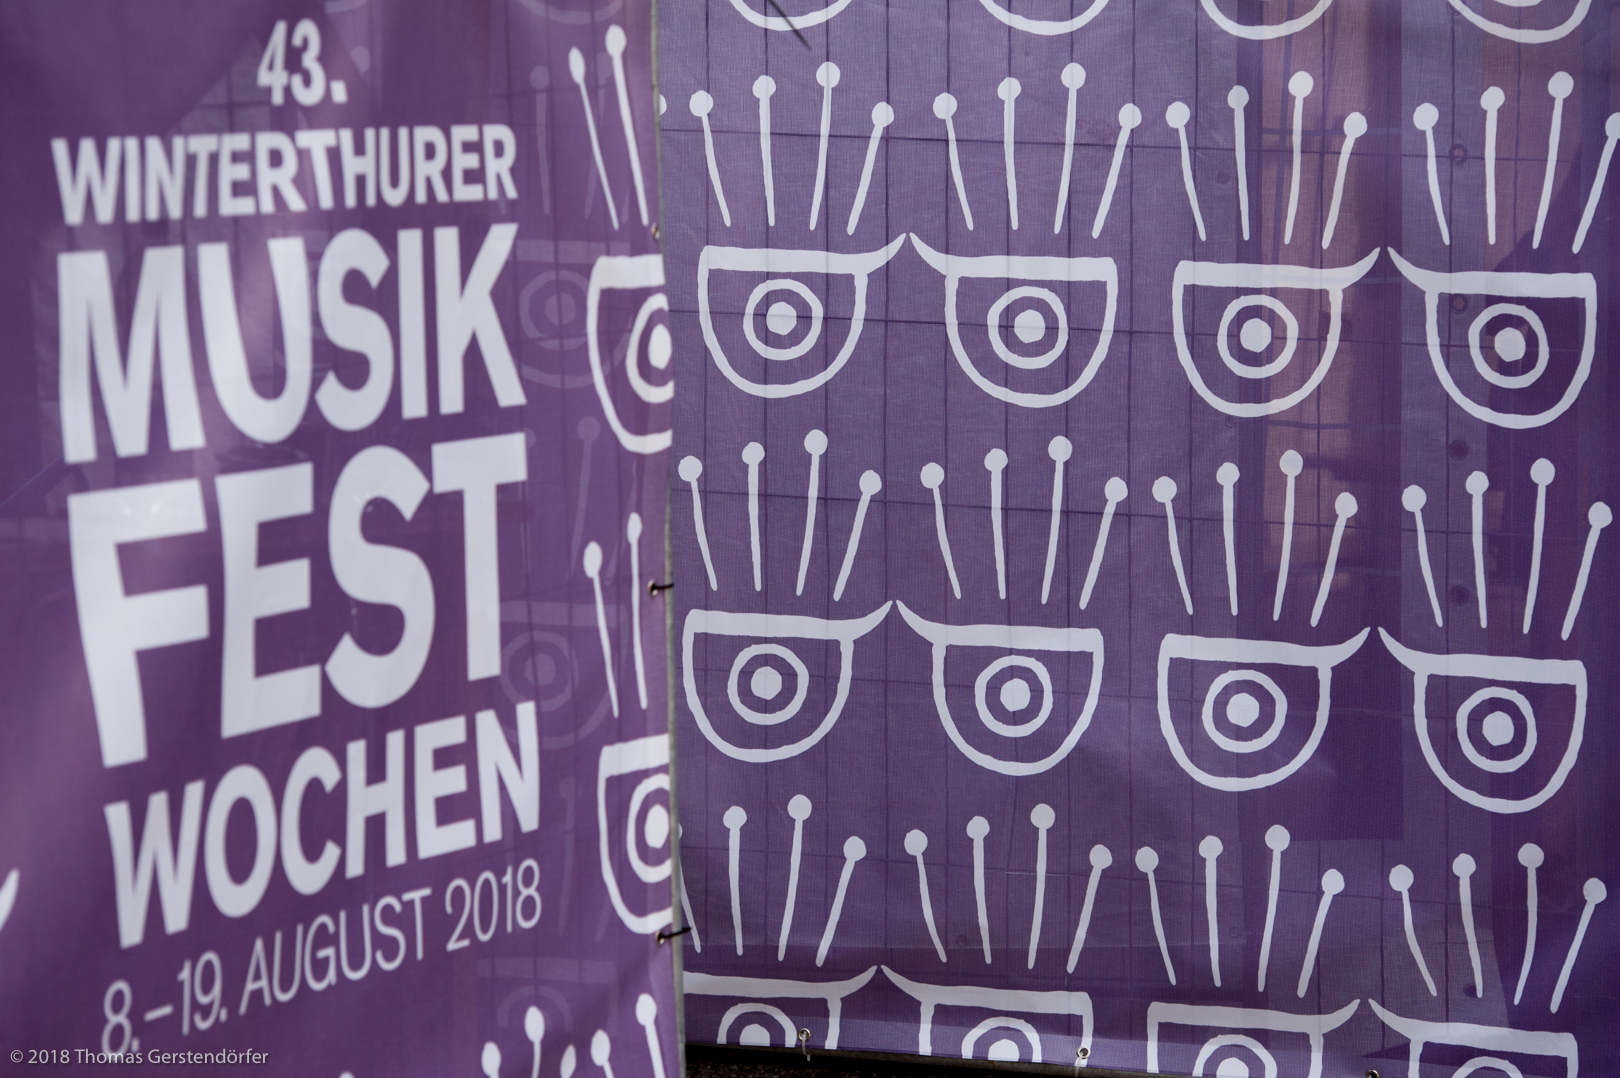 Winterthurer musikfestwochen August 2018 lila Plakat